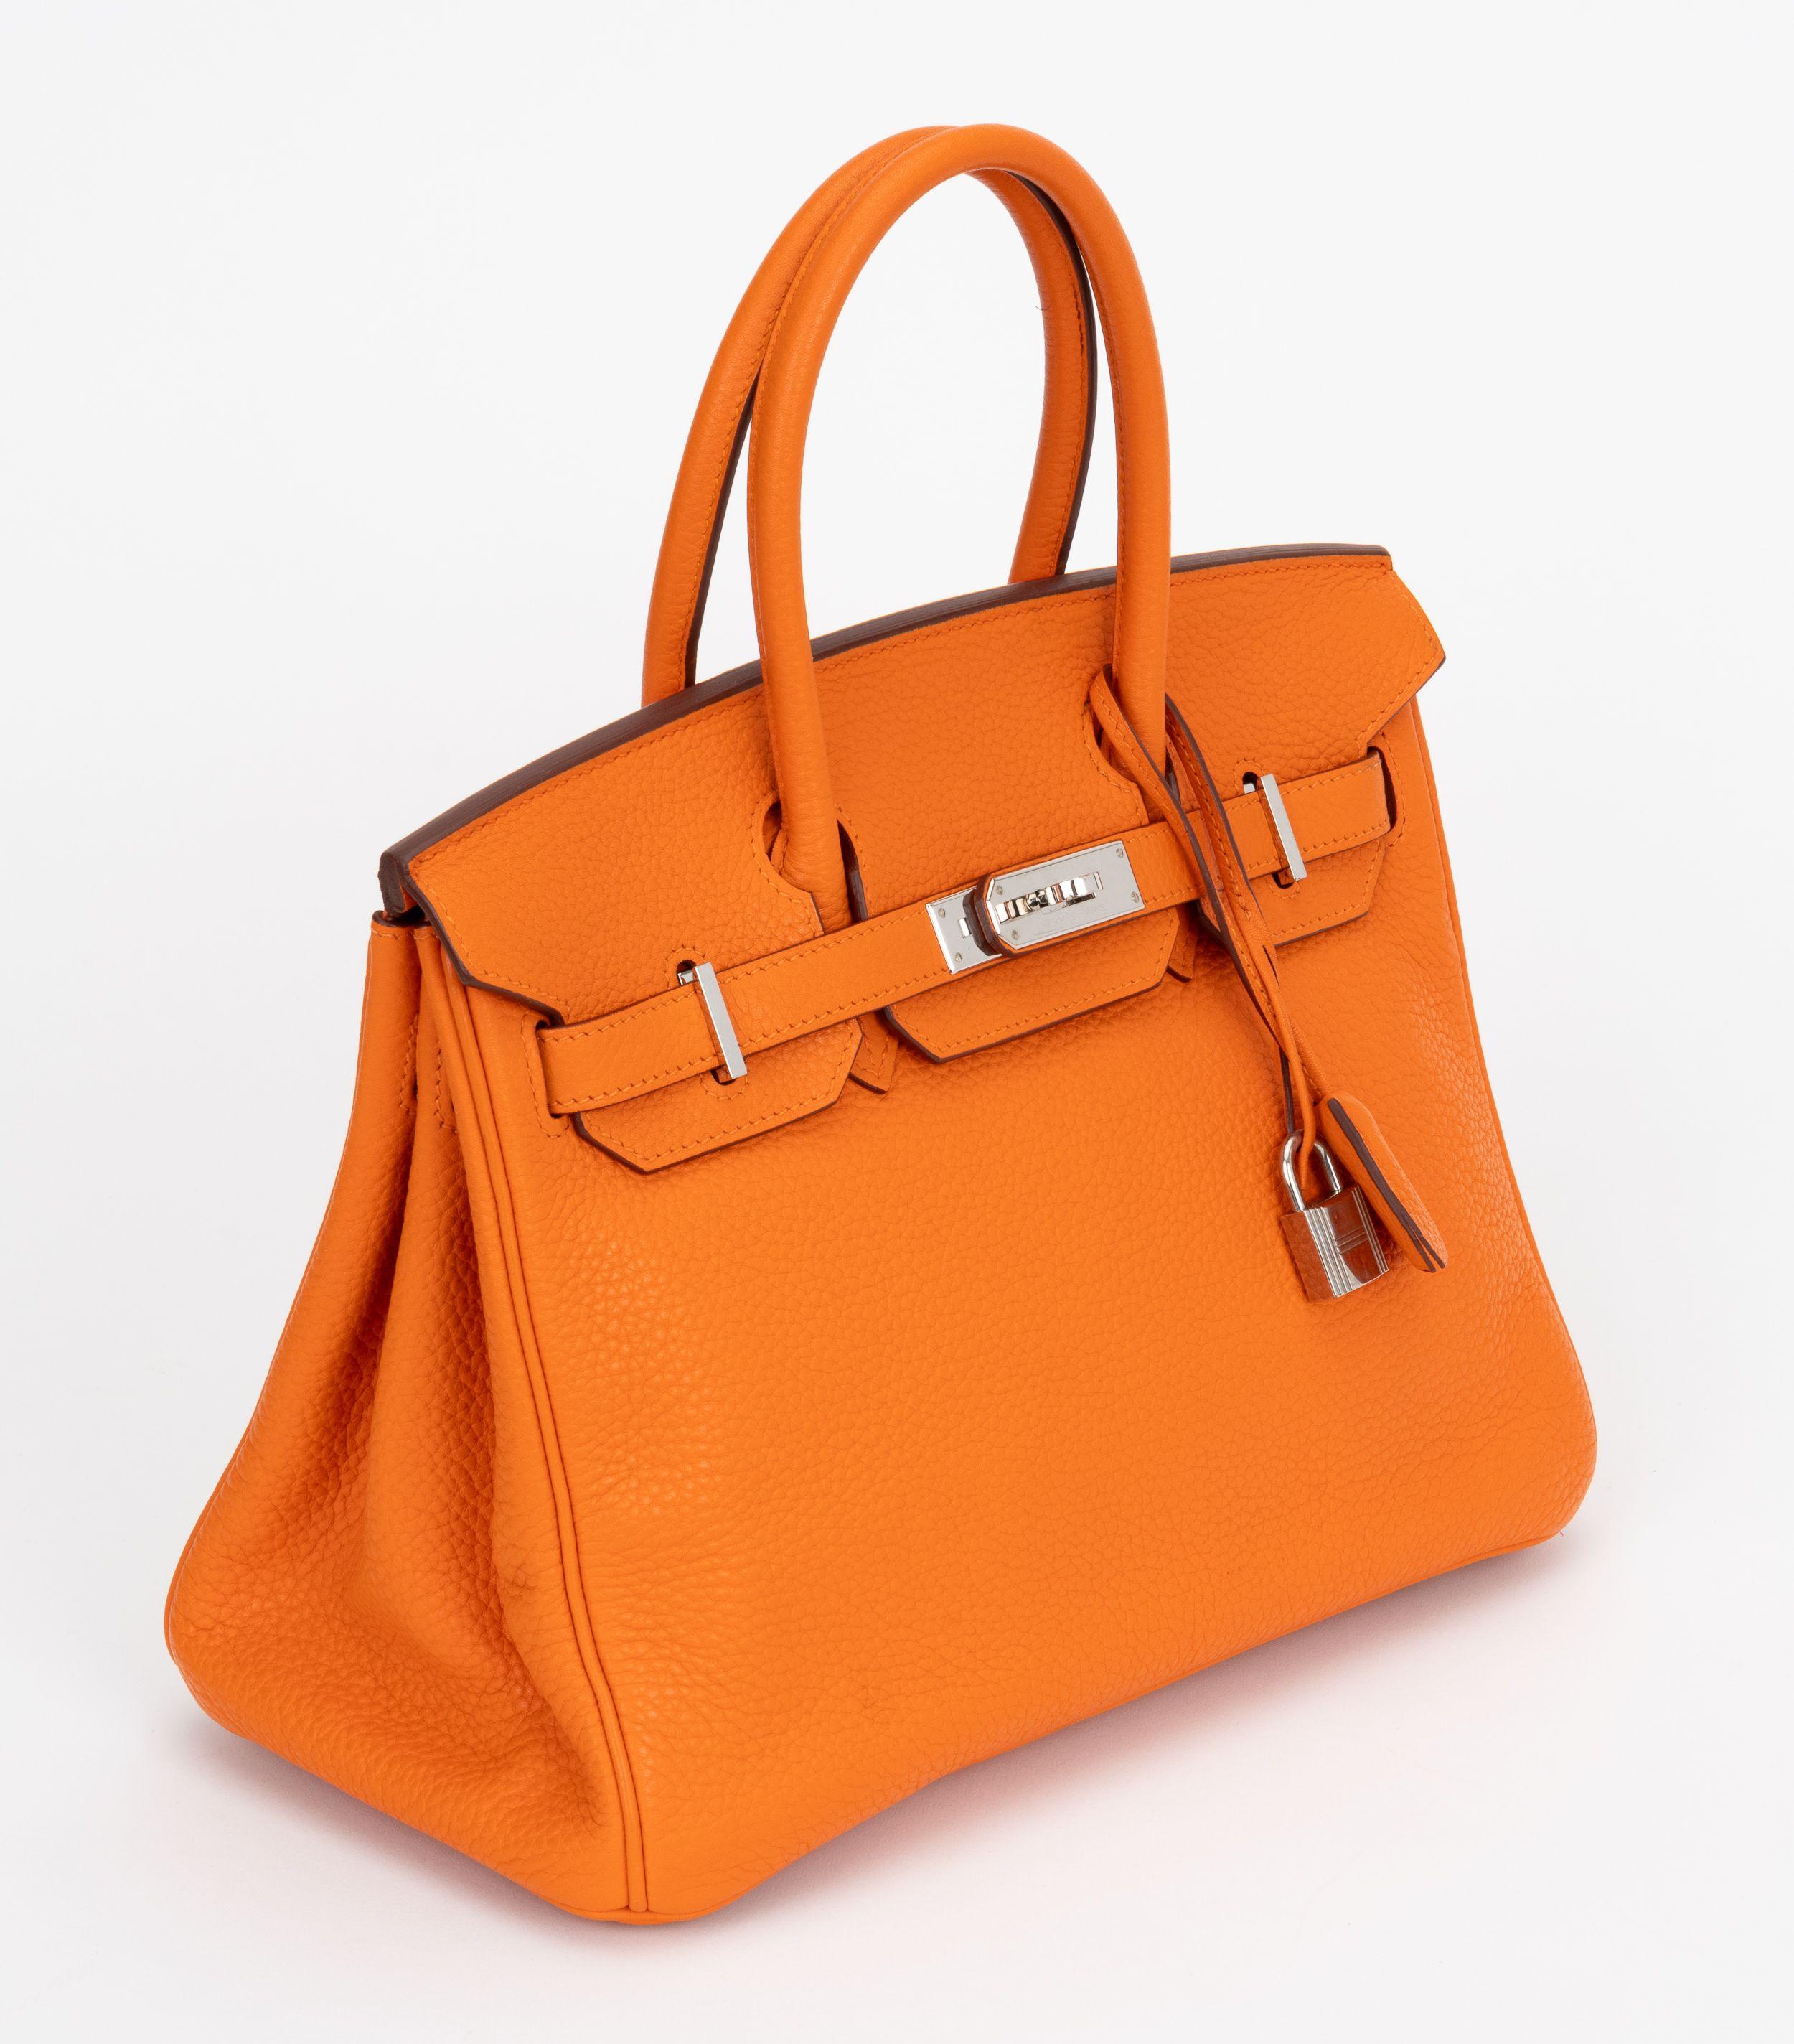 Hermès 30cm Birkin bag in orange taurillon clemence leather and palladium hardware. Handle drop, 3